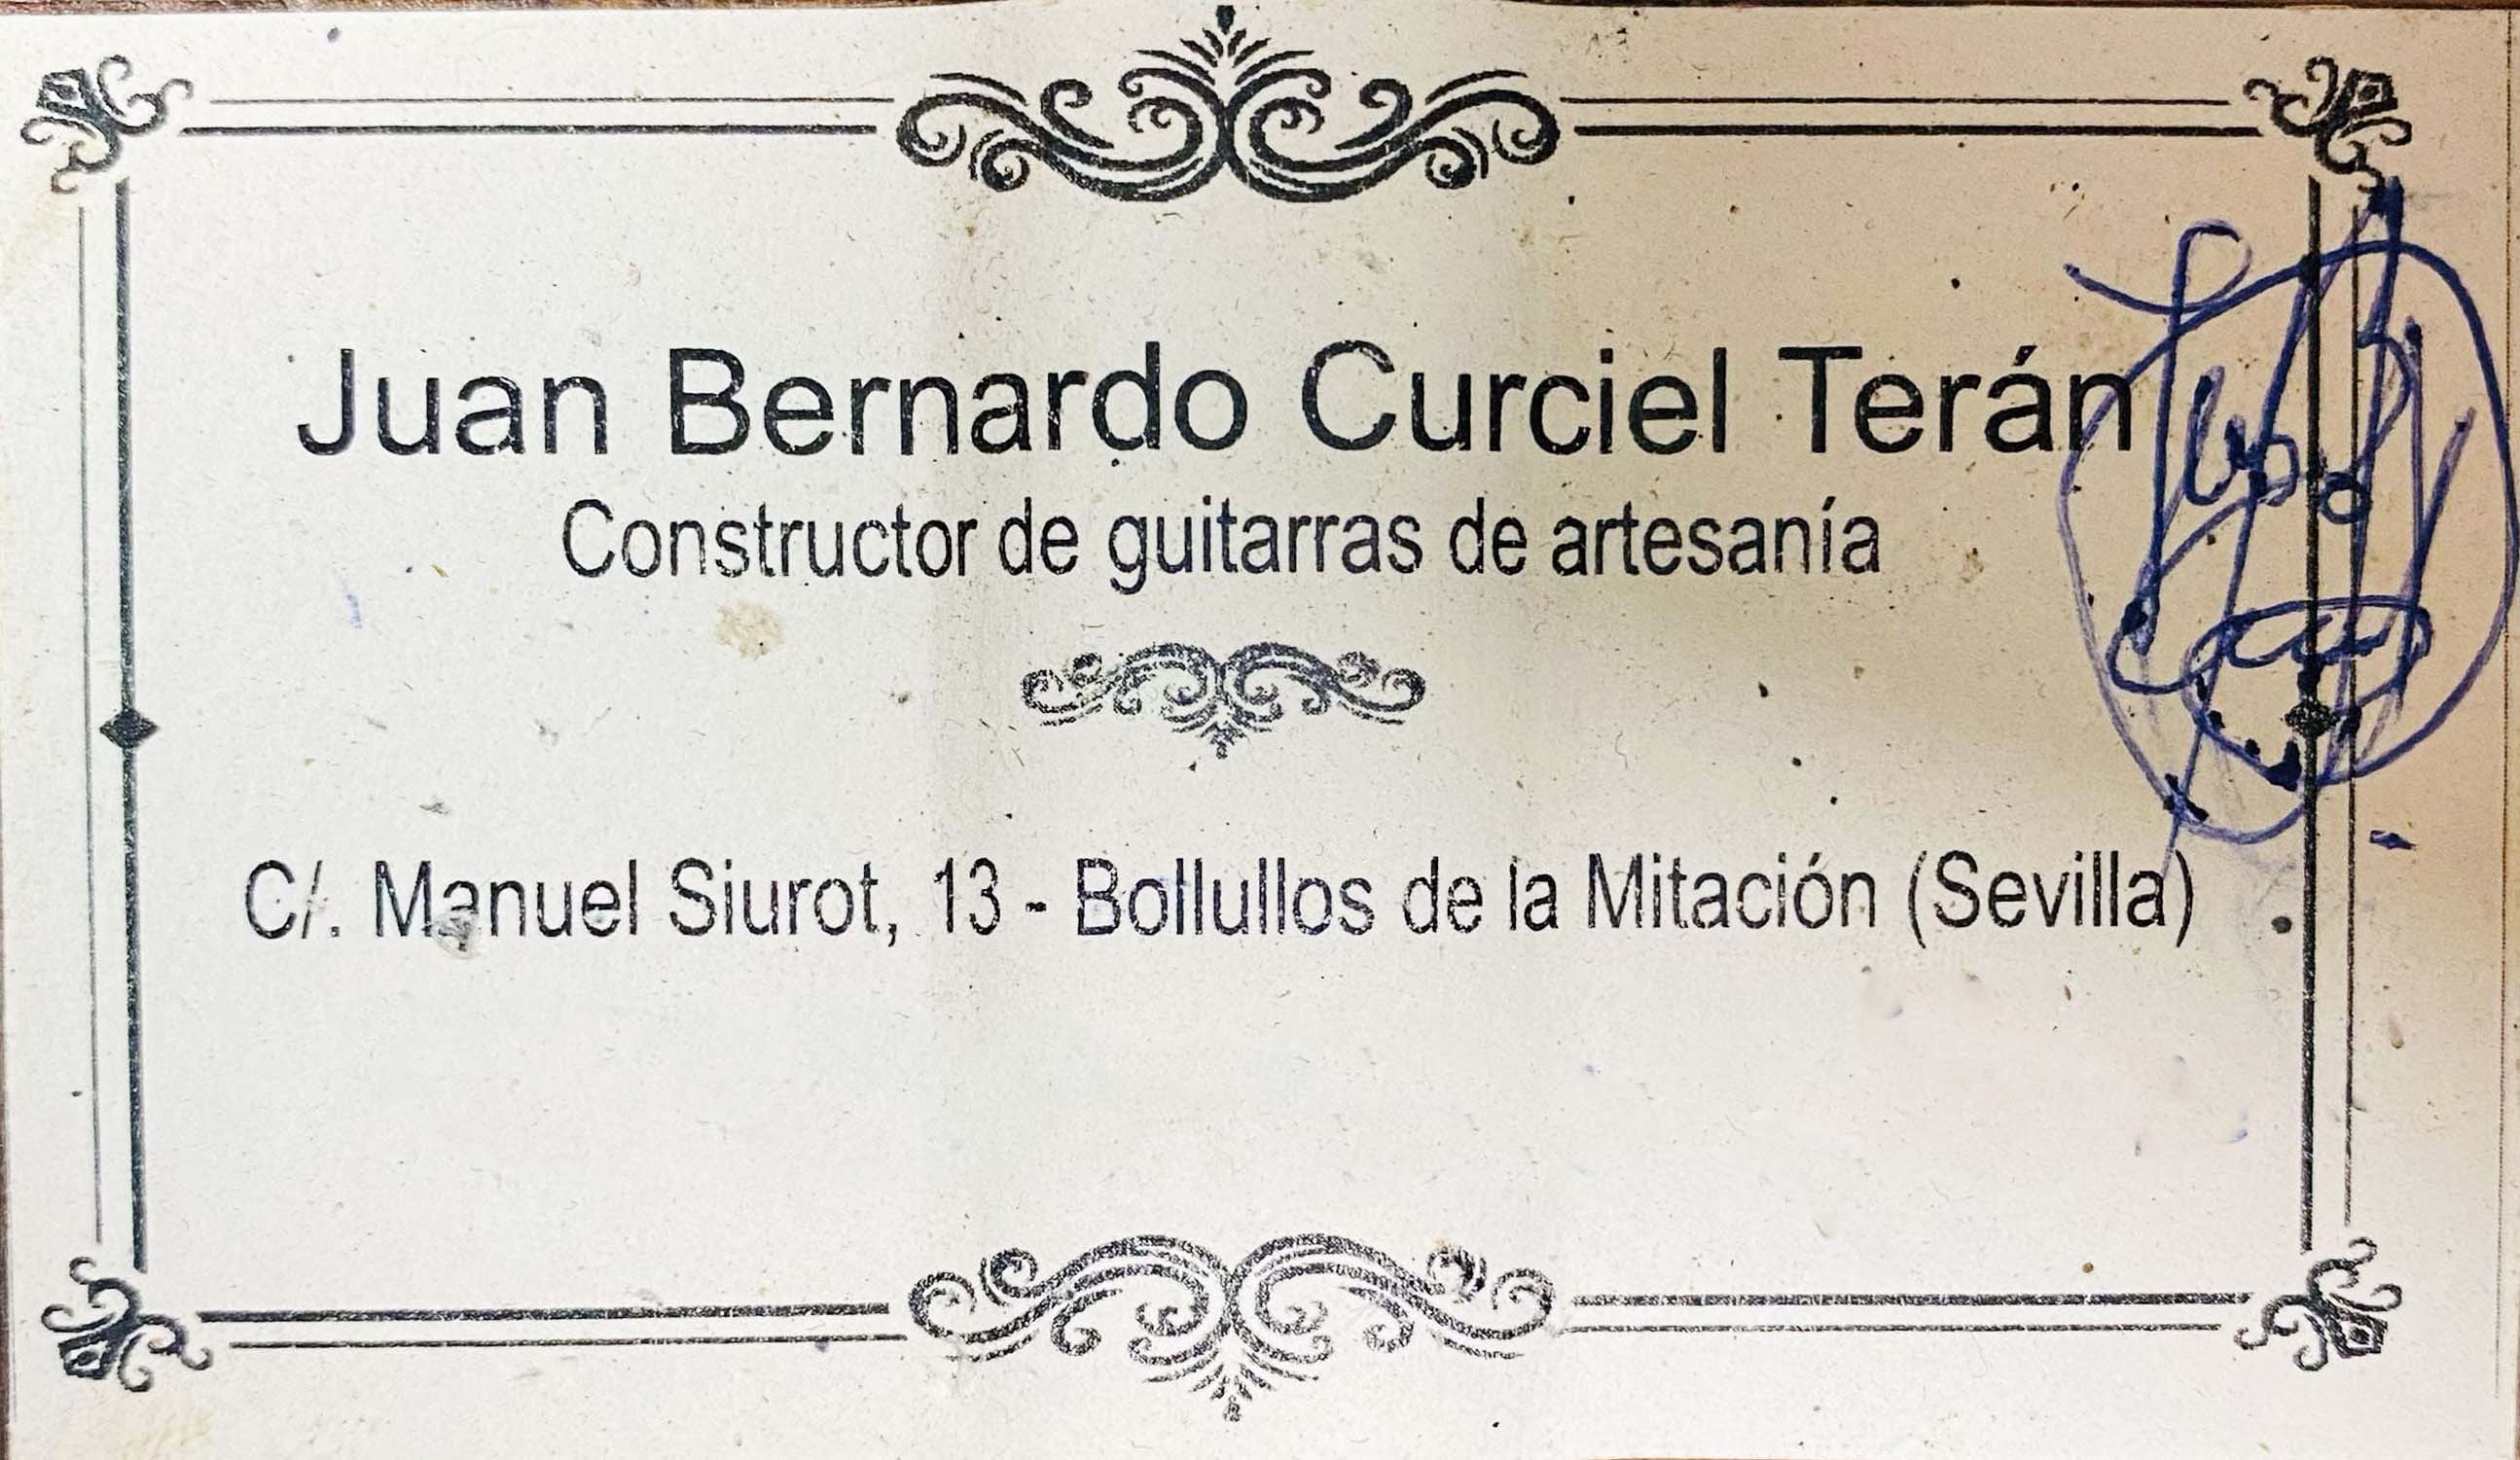 Juan Bernardo Curciel Teran